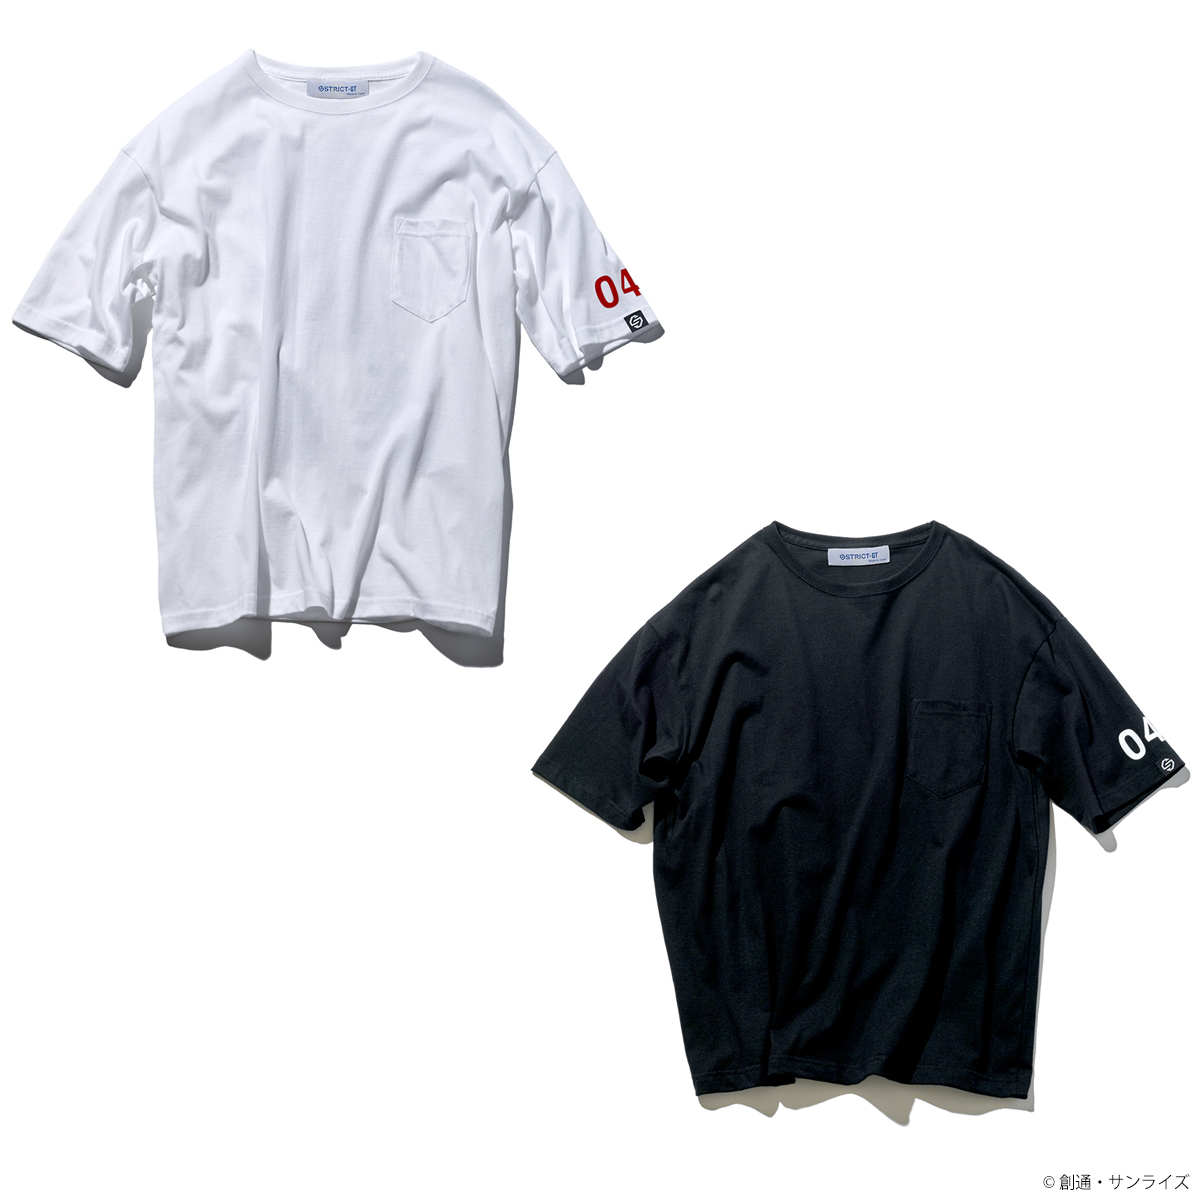 STRICT-G『機動戦士ガンダム 逆襲のシャア』ポケット付きビッグ Tシャツ サザビー